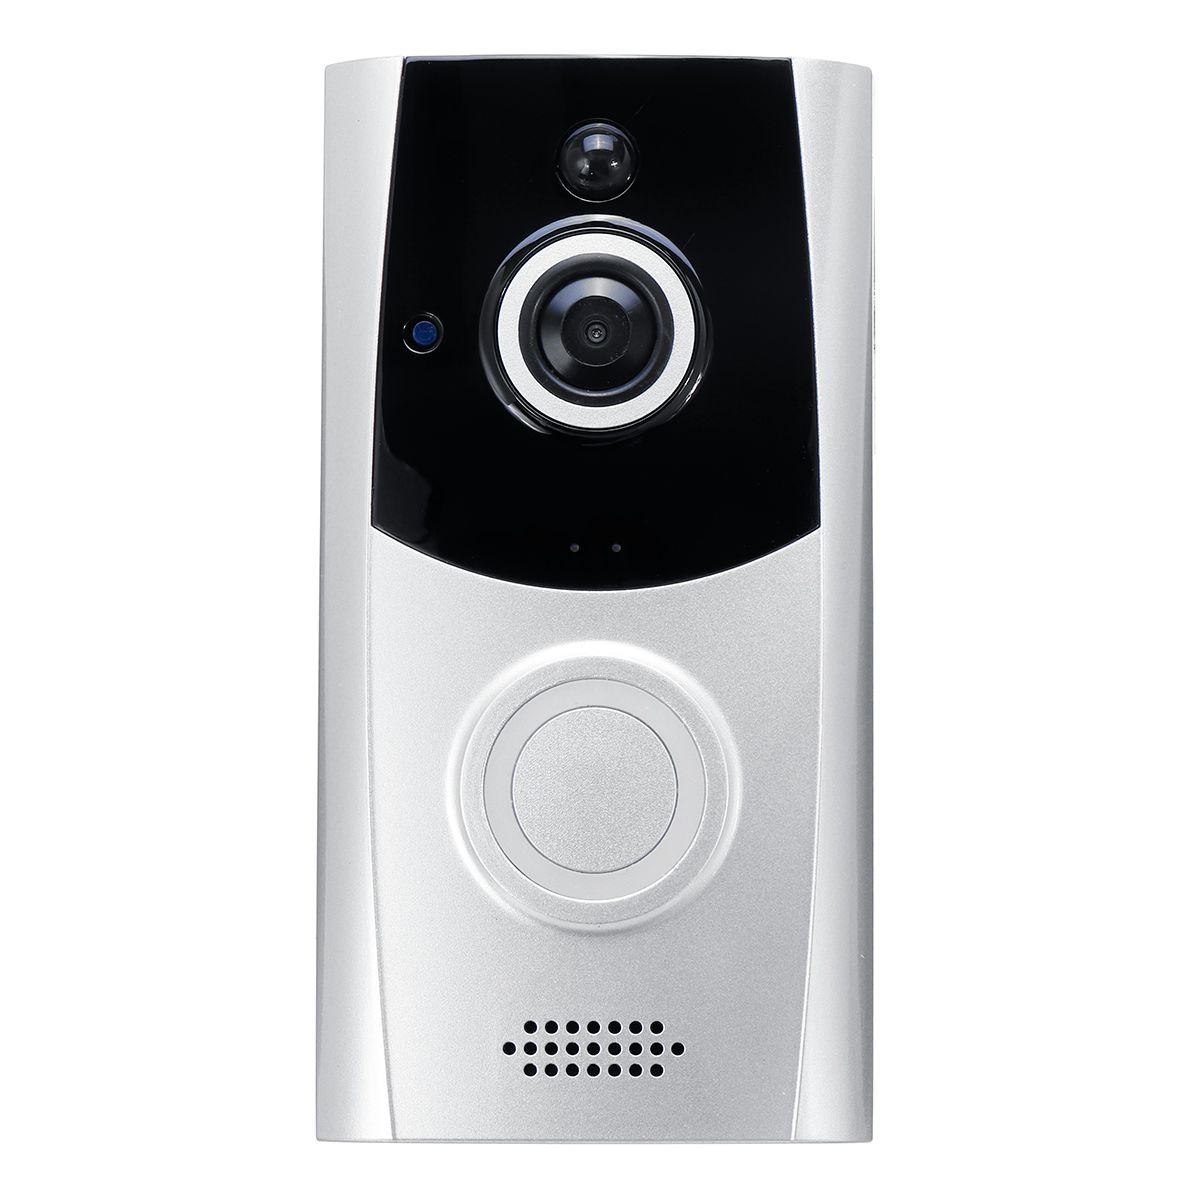 Wireless-WiFi-APP-Remote-Video-Camera-Doorbell-Monitoring-Alarm-Home-Security-1533726